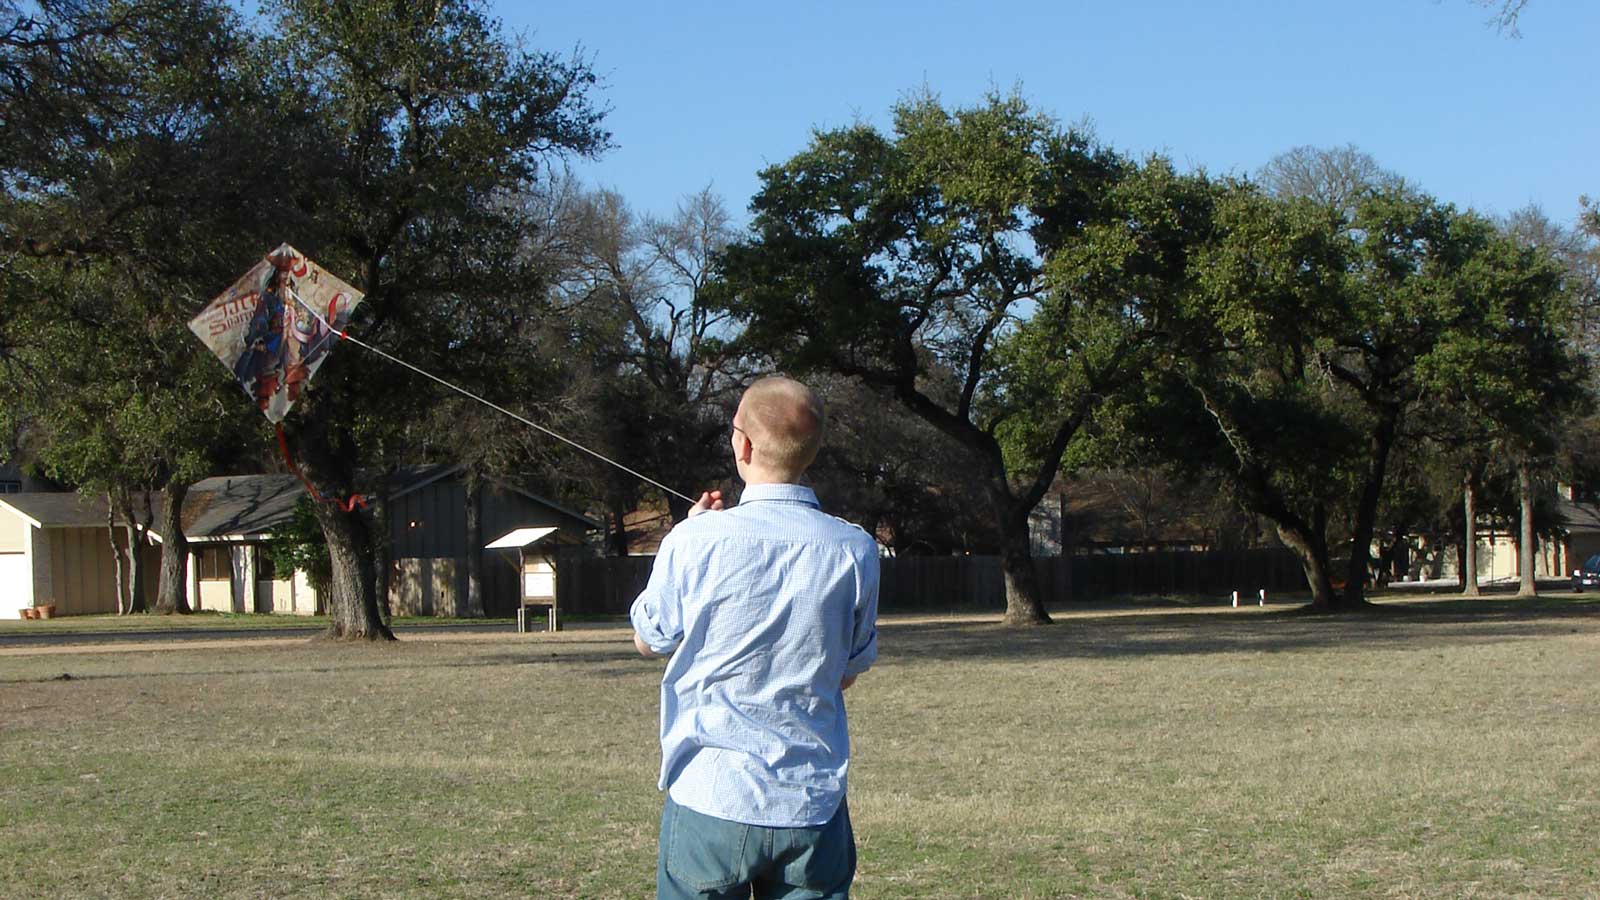 William with his kite